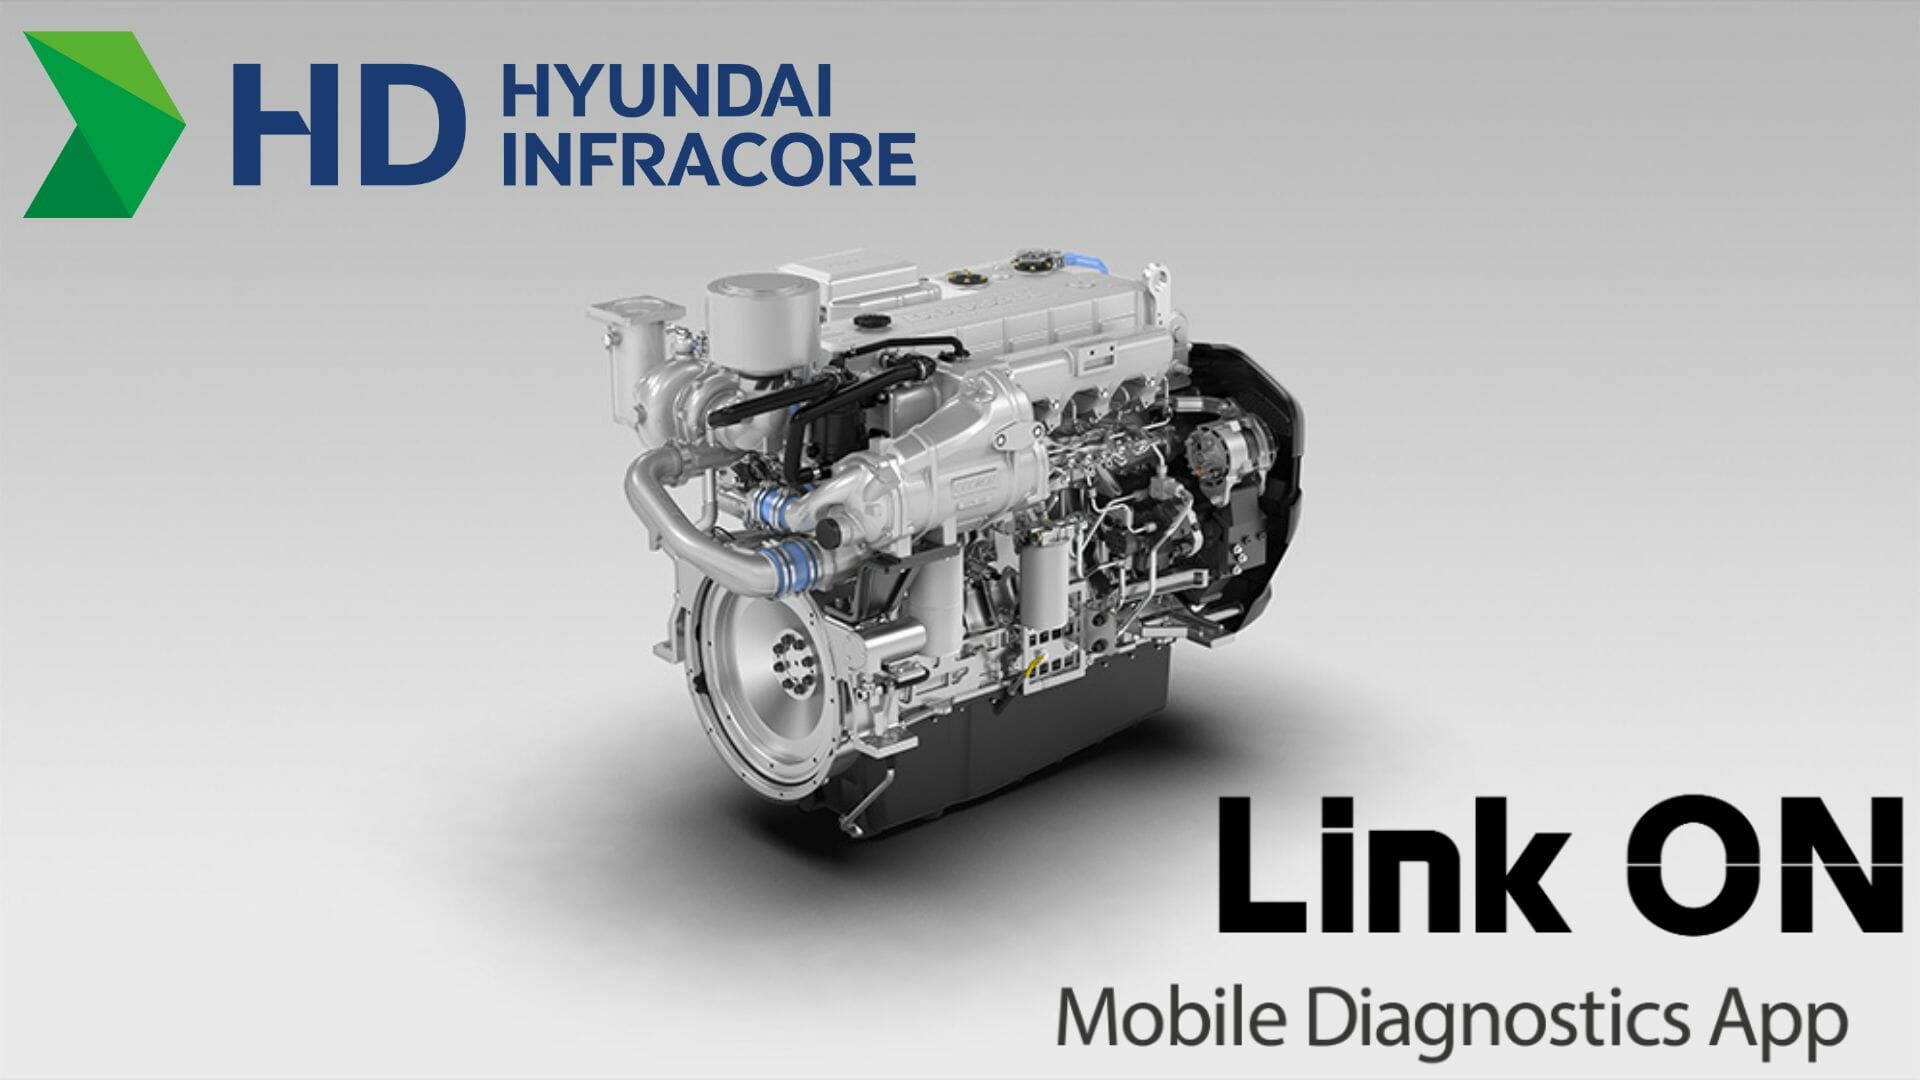 hd-hyundai-infracore-link-on-mobile-diagnostics-app